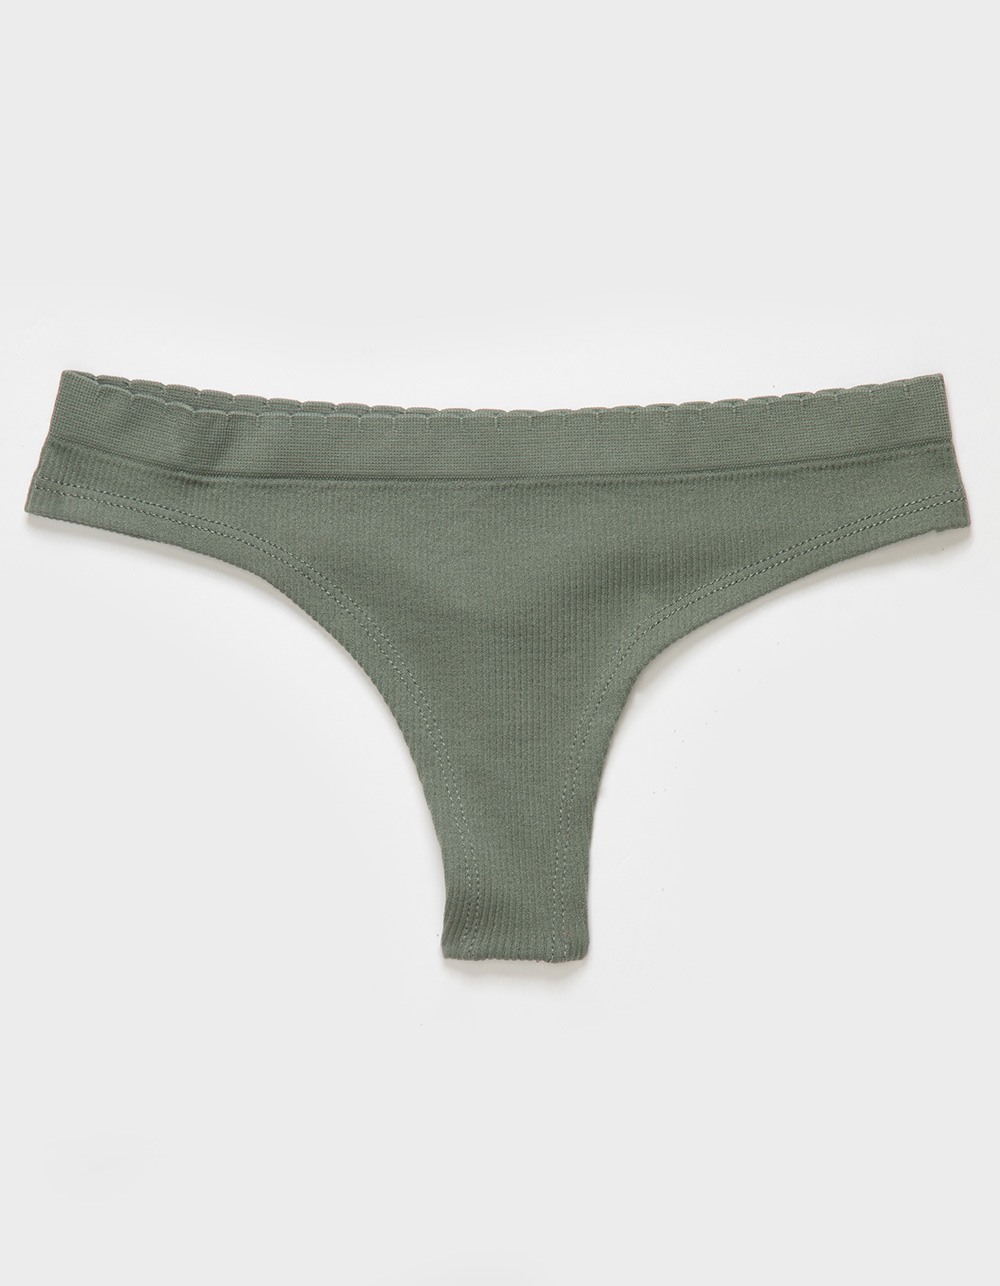  YYDFS Women's Tanga T-back Cheecky Thong Underpant